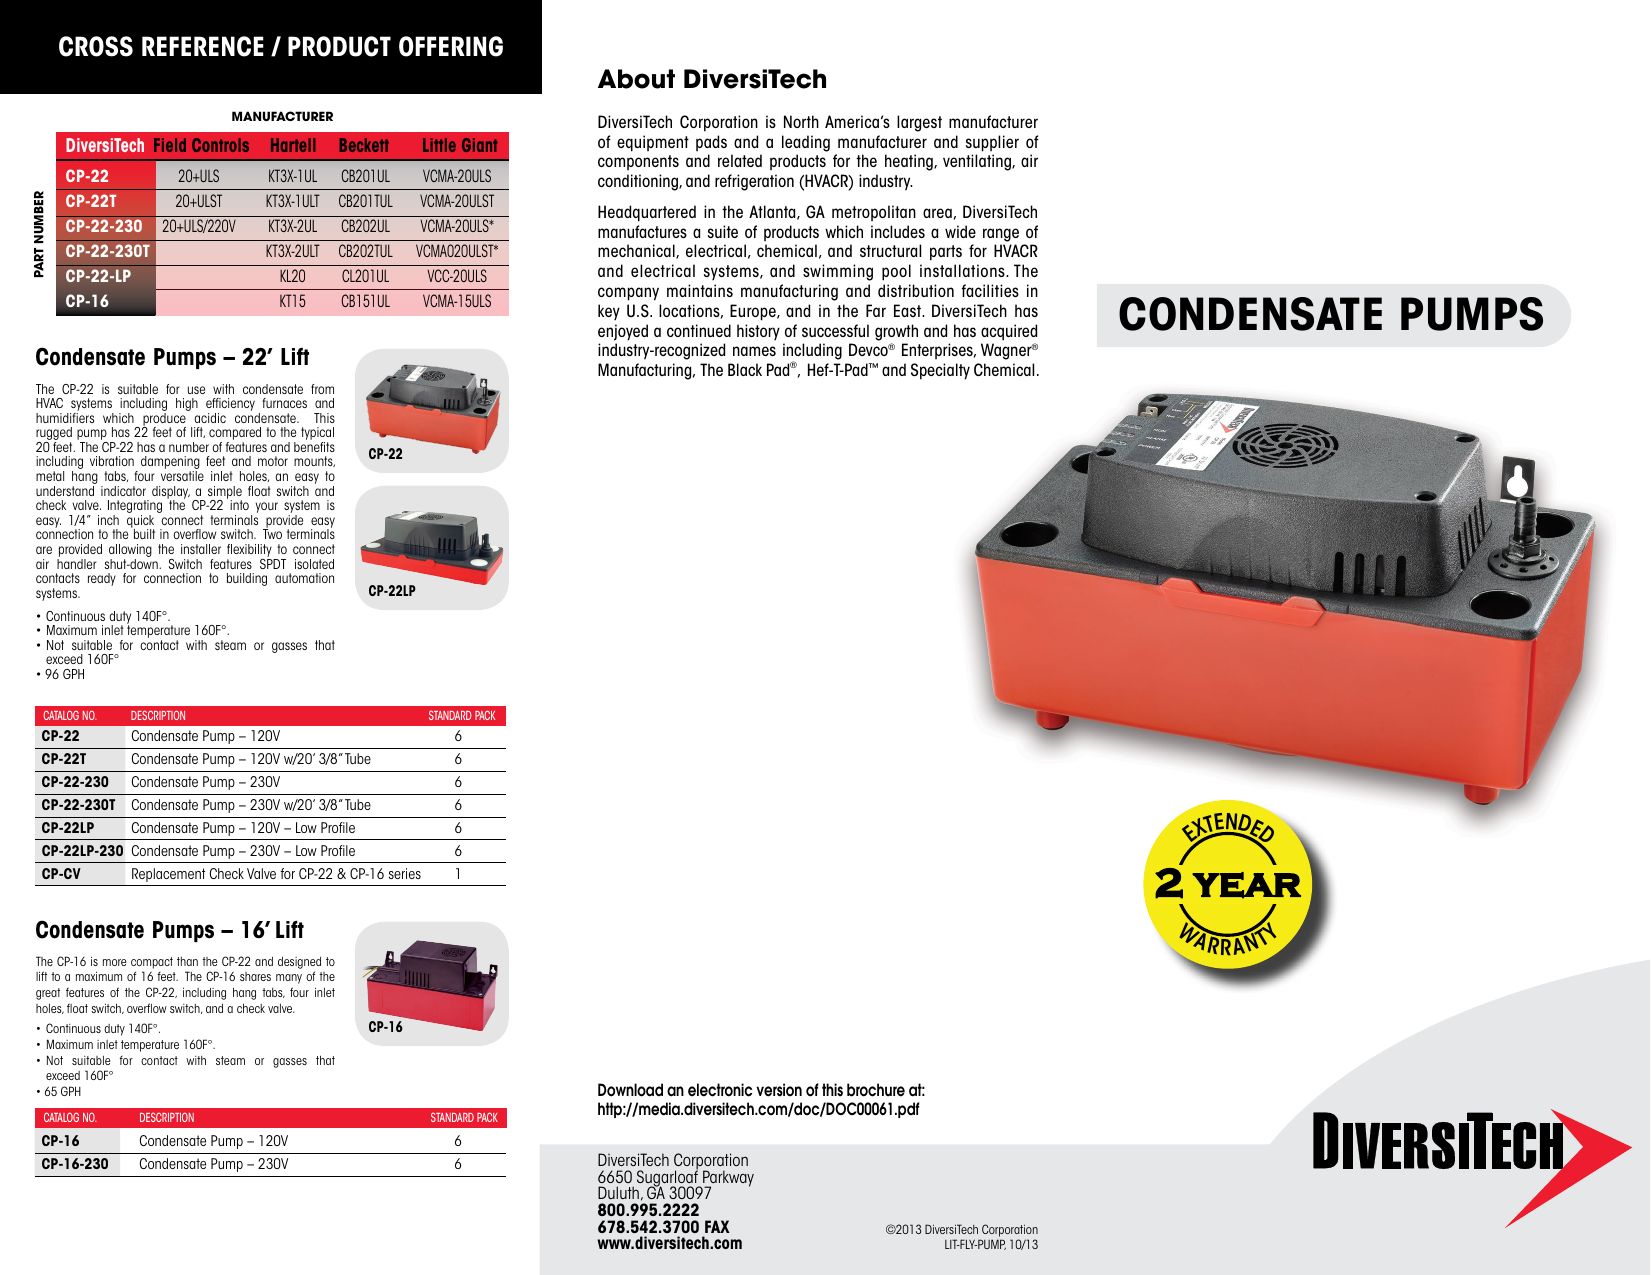 DiversiTech Cp-22t Condensate Pump 120 V 4 Inlet Holes 22 of Lift for sale online 